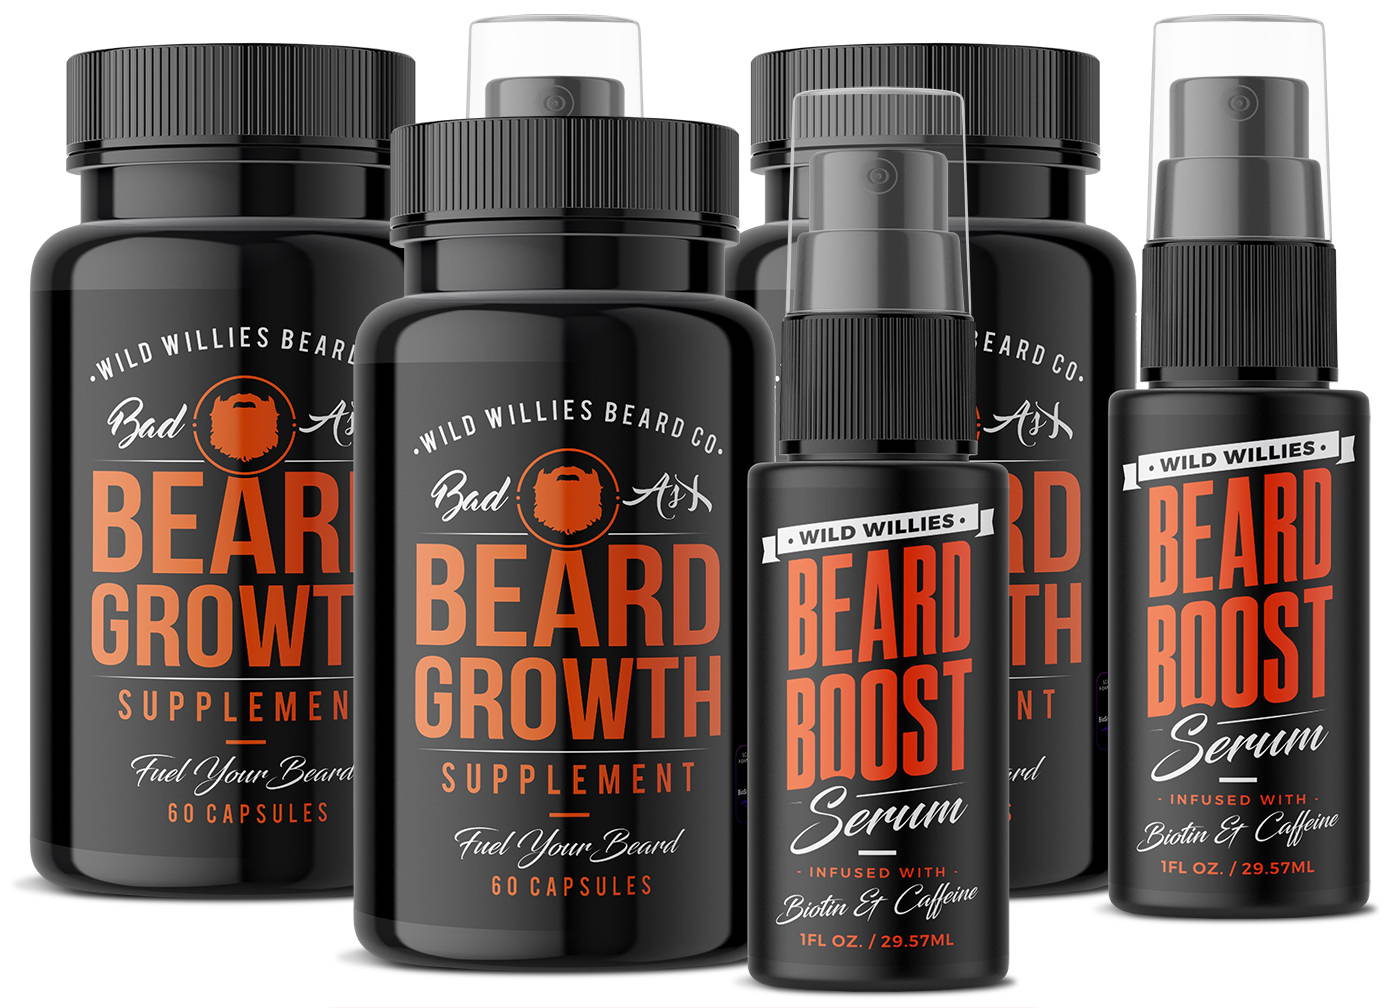 beard growth kits